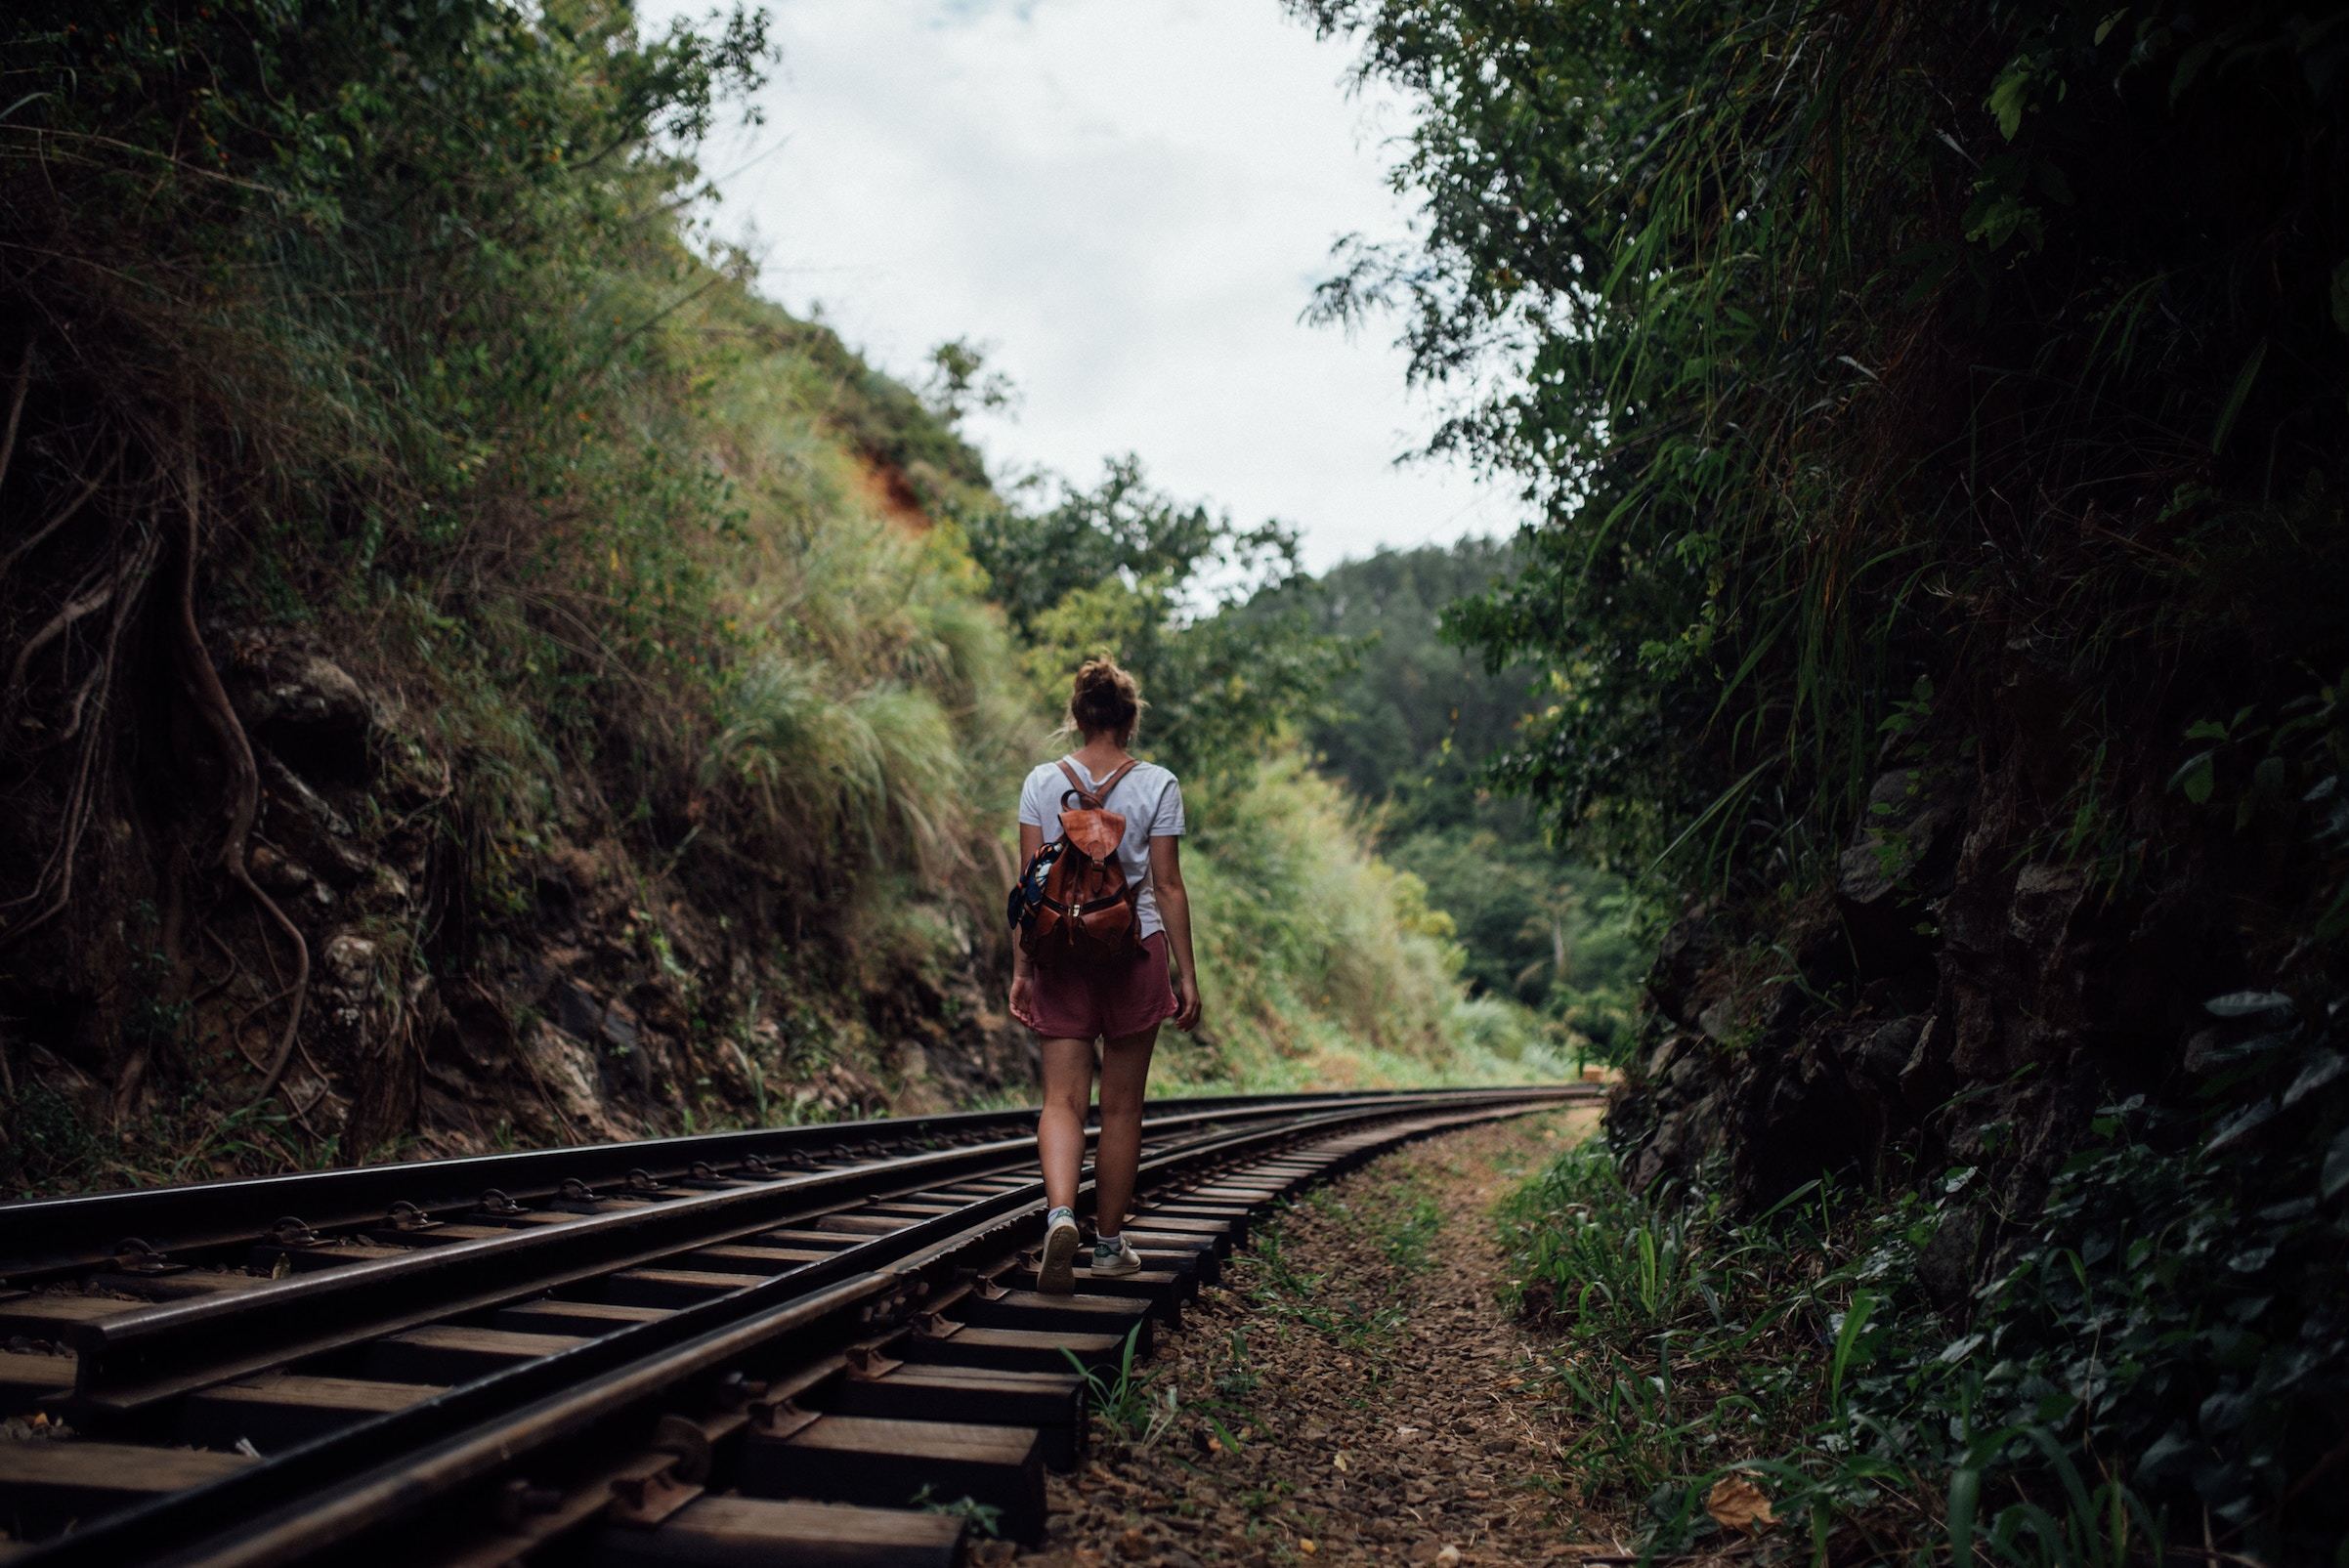 Woman walking along rural train tracks